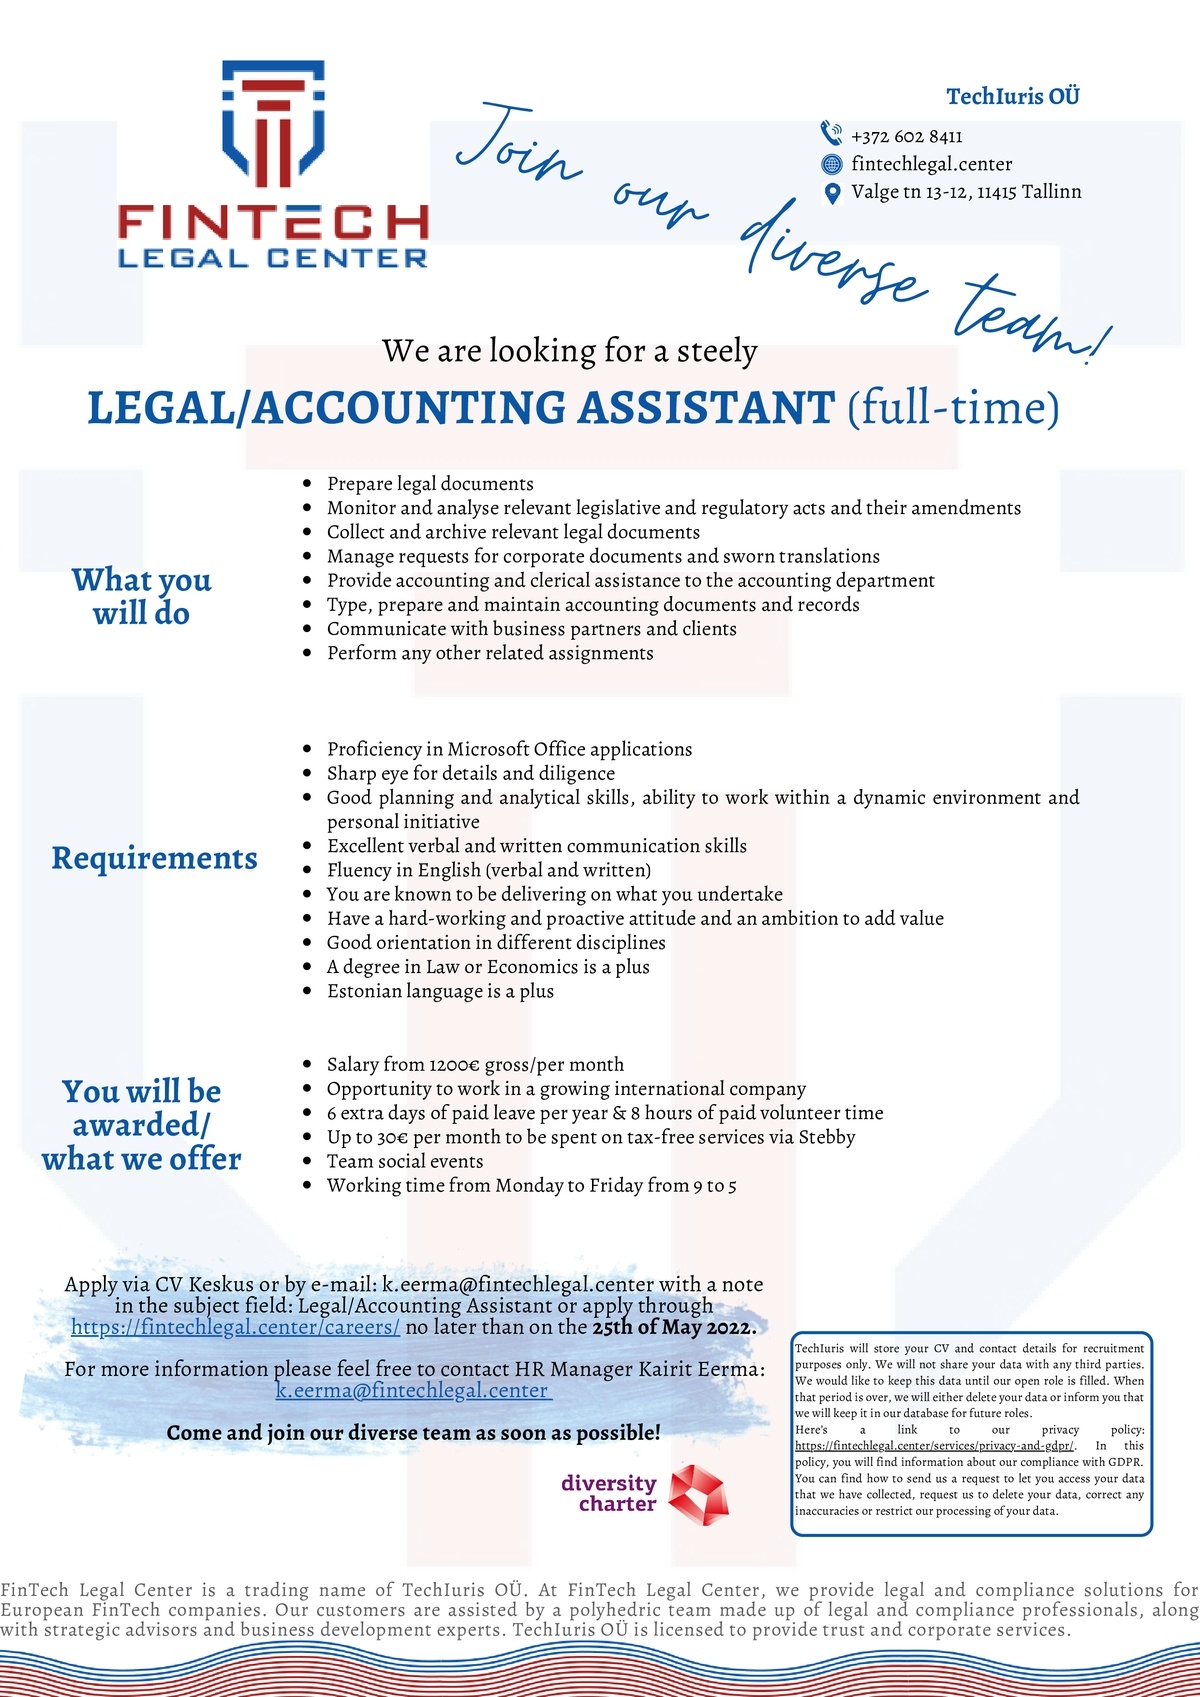 TechIuris OÜ Legal/Accounting Assistant